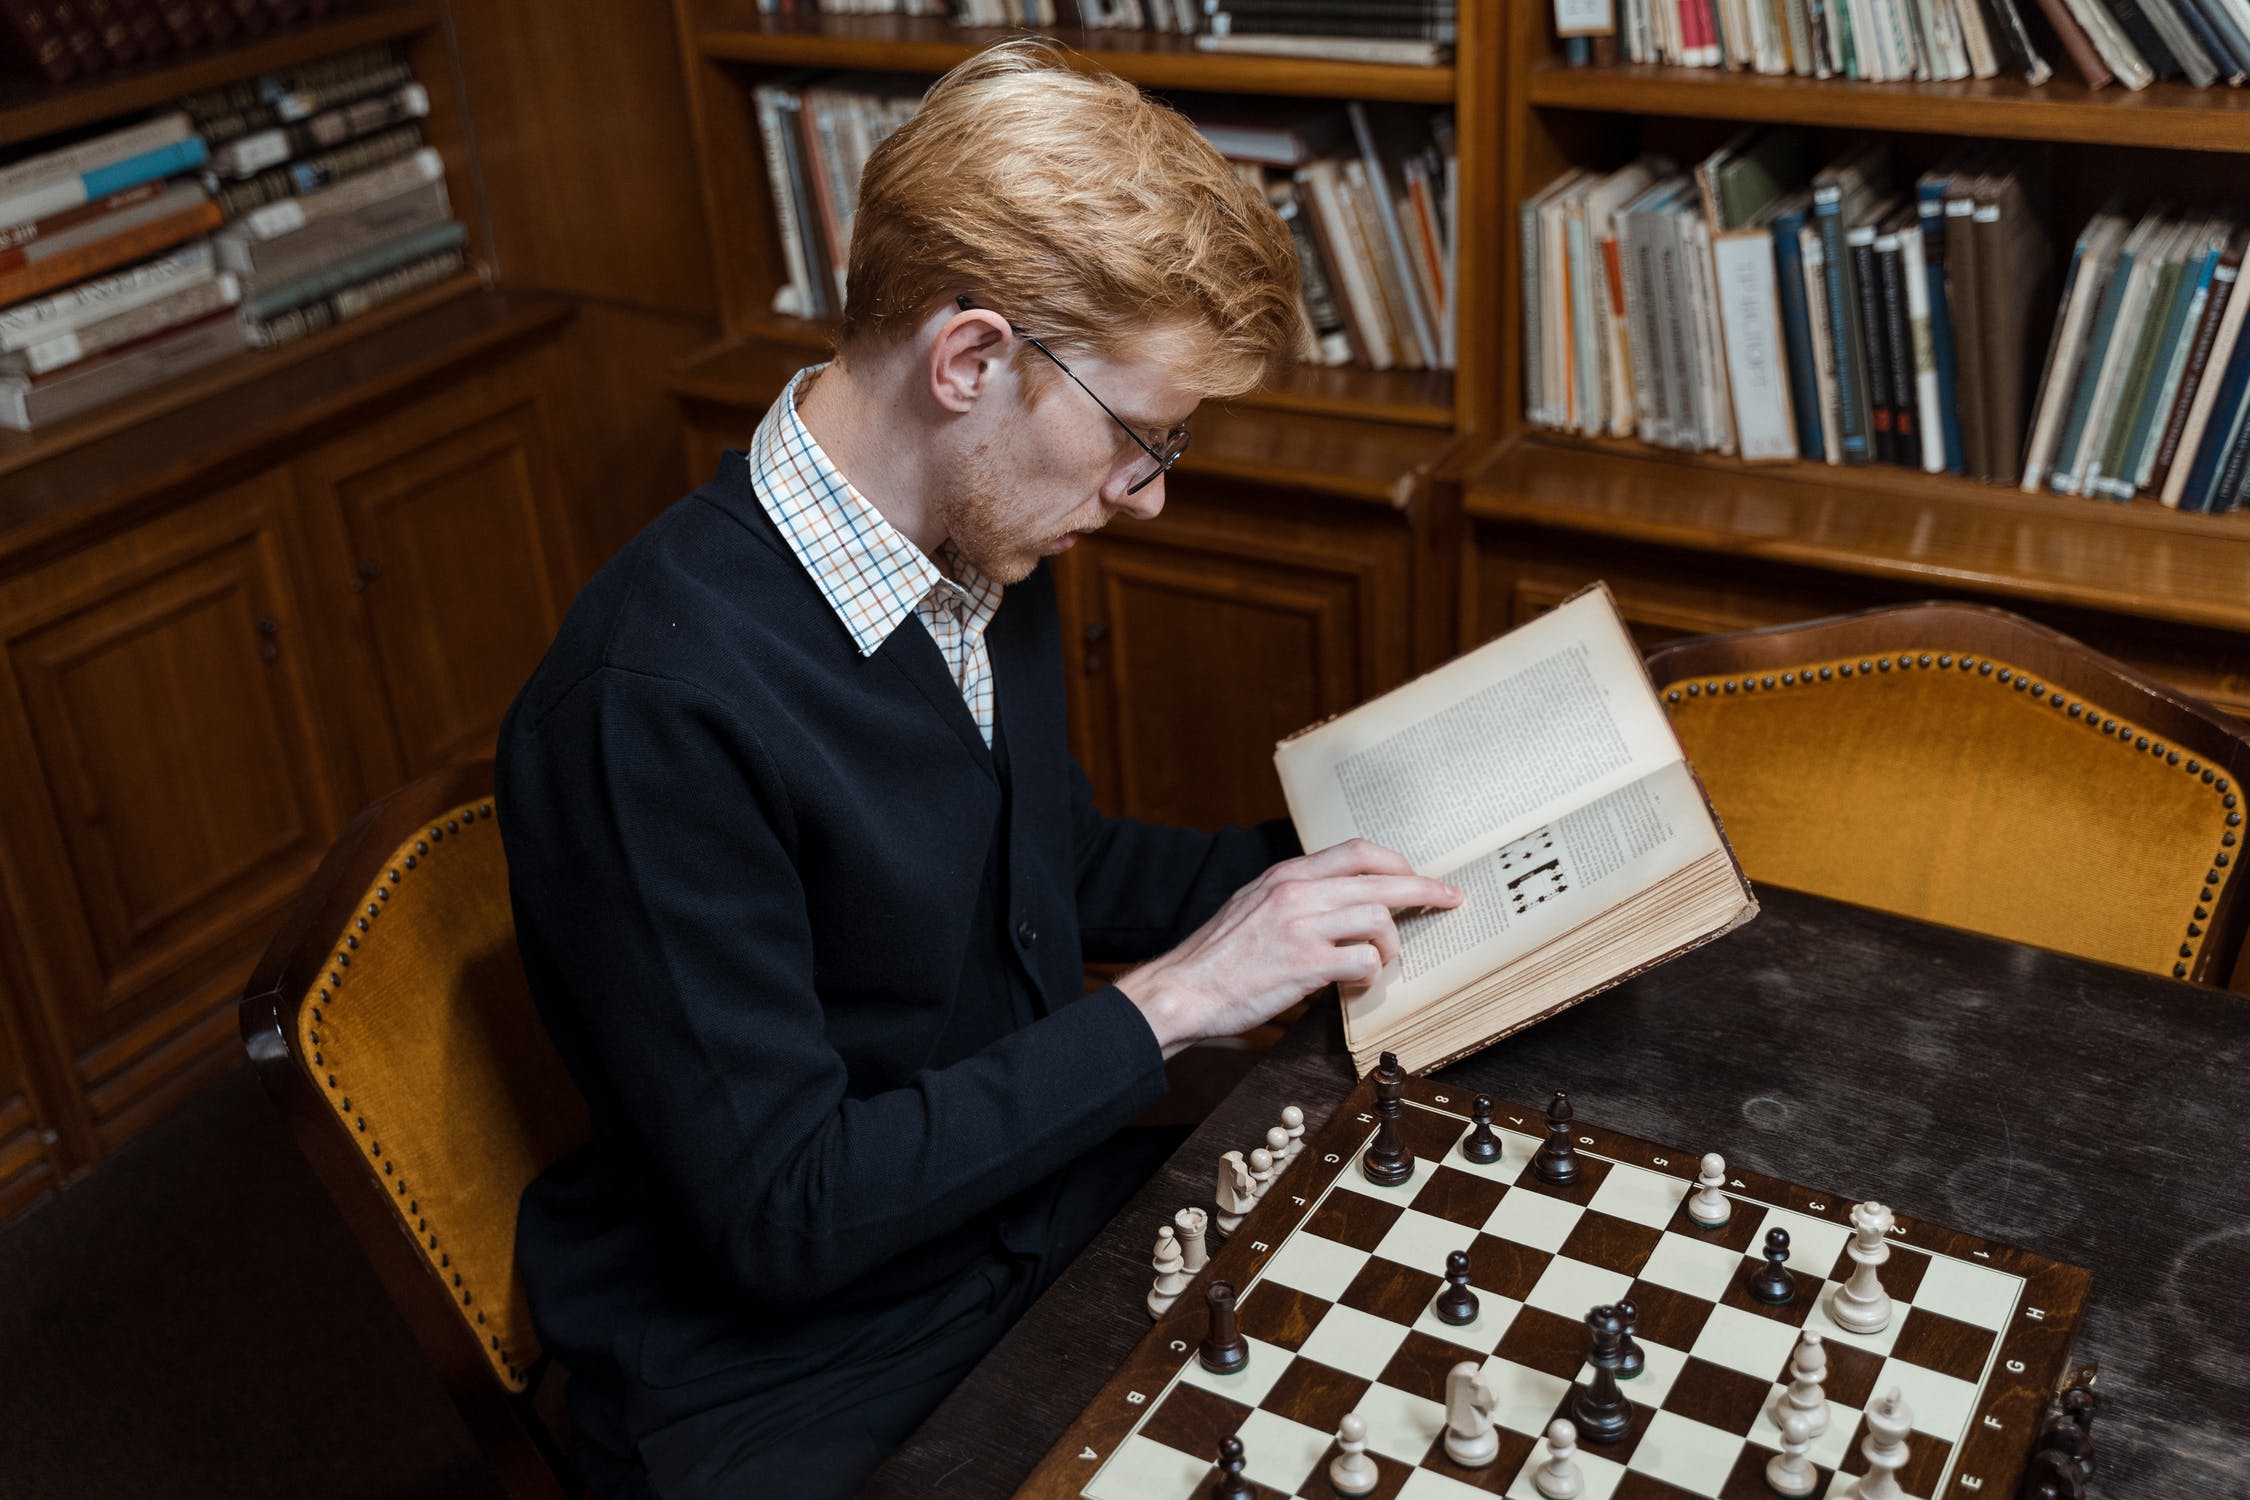 Bobby Fischer Teaches Chess.pdf 